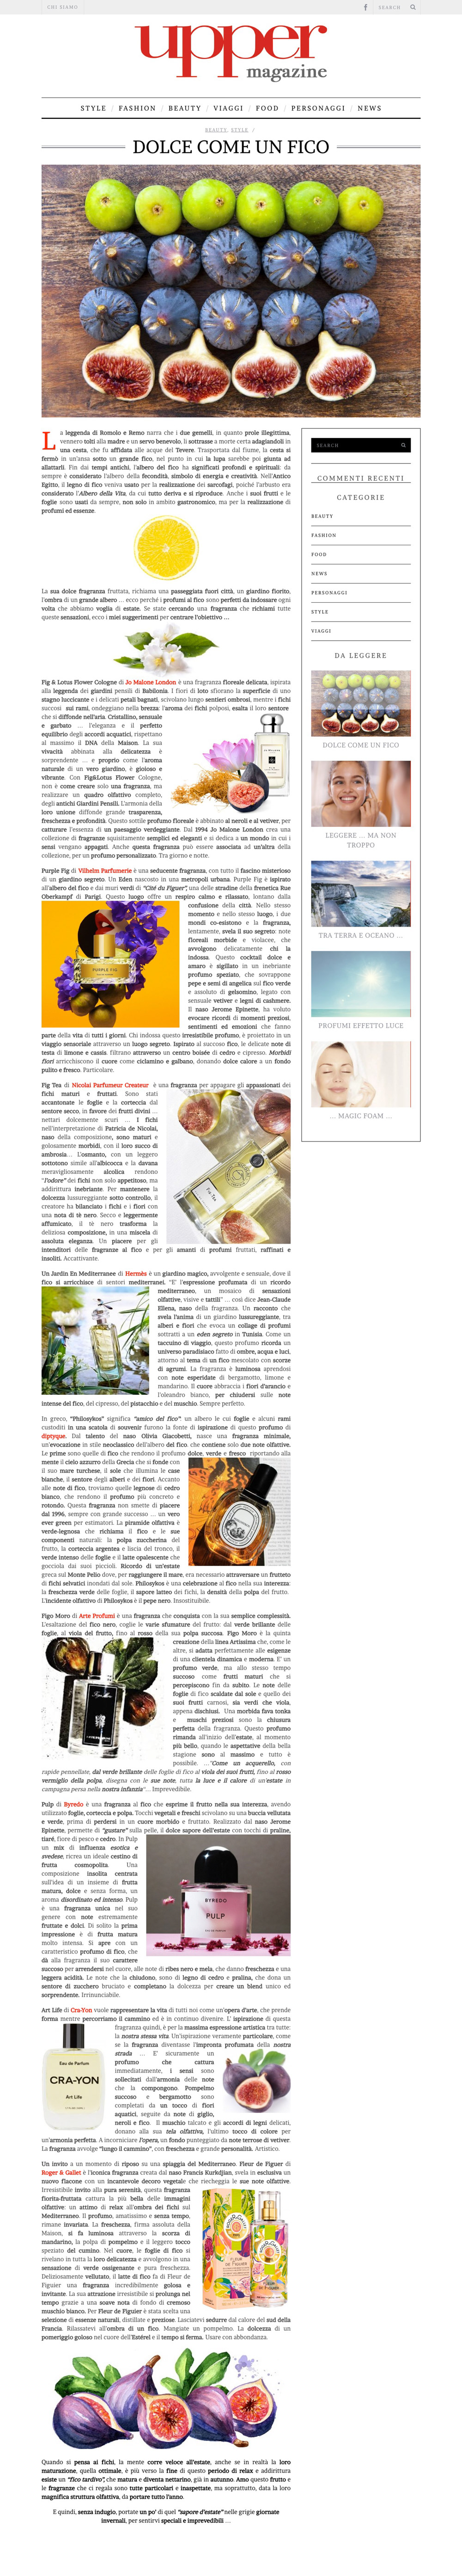 uppermagazine online figue nicolai officina parfum